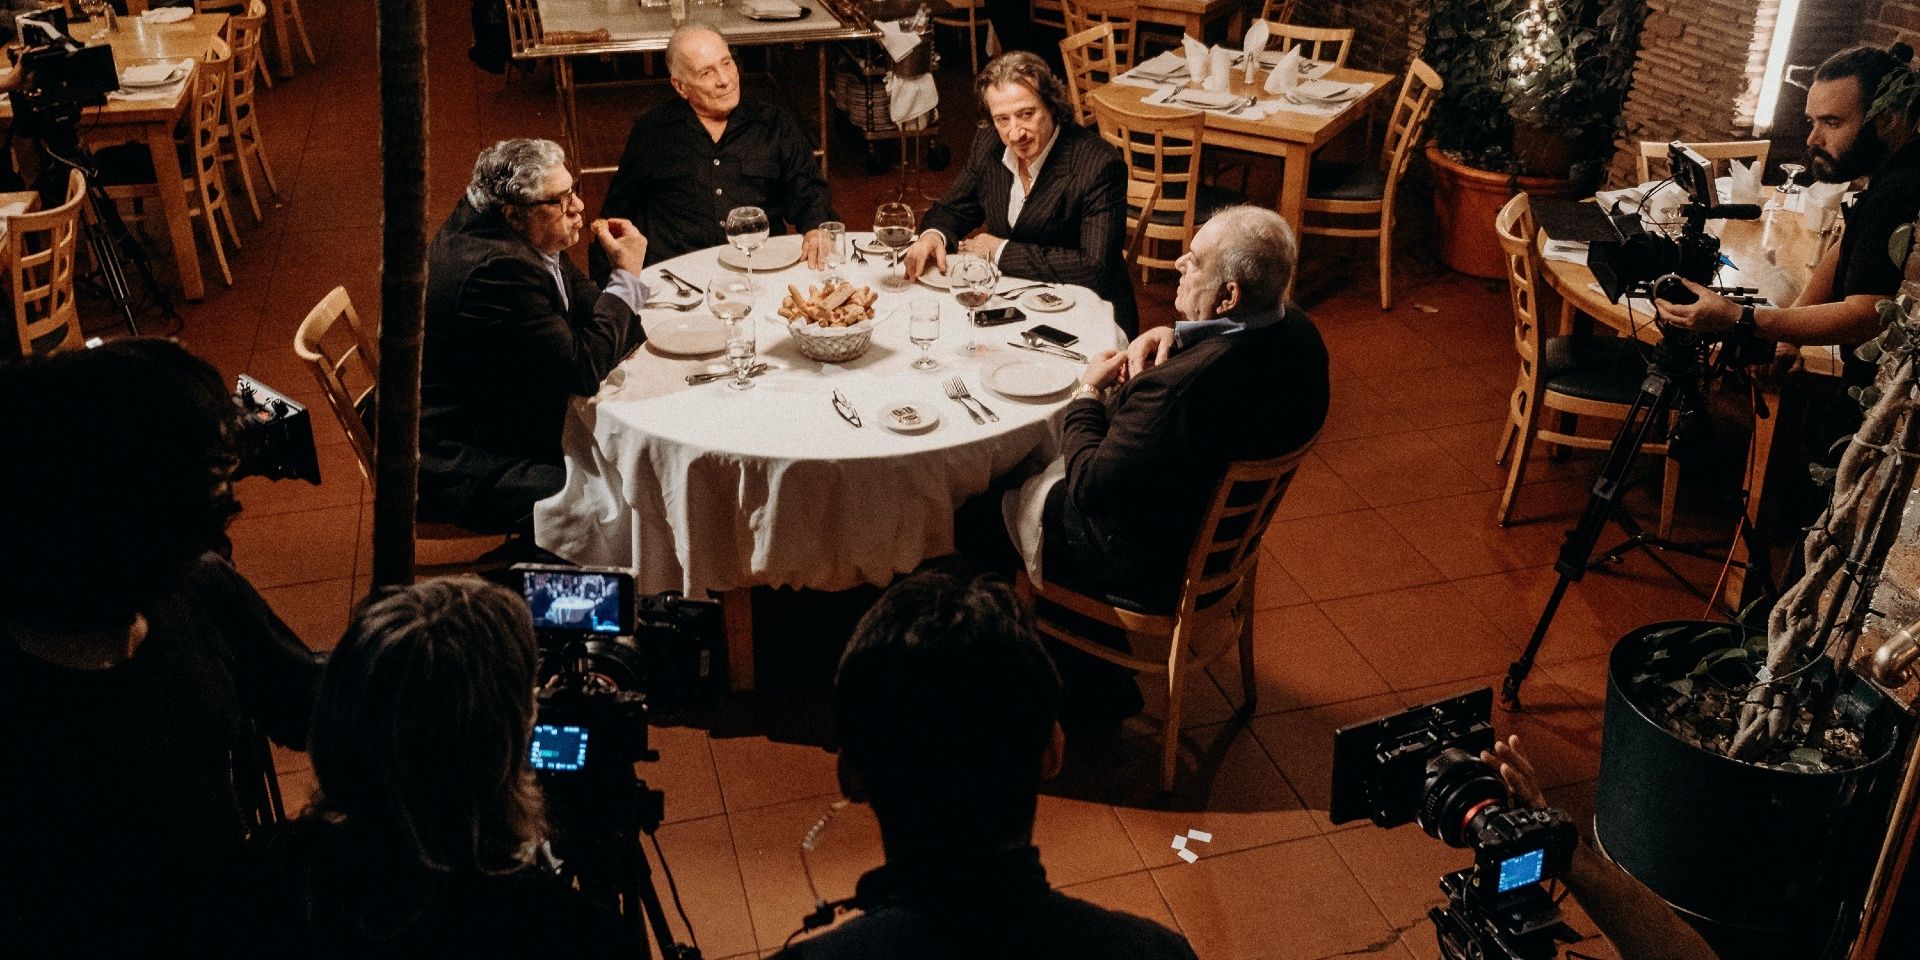 Sopranos actors discuss the show in Celebrating The Sopranos 